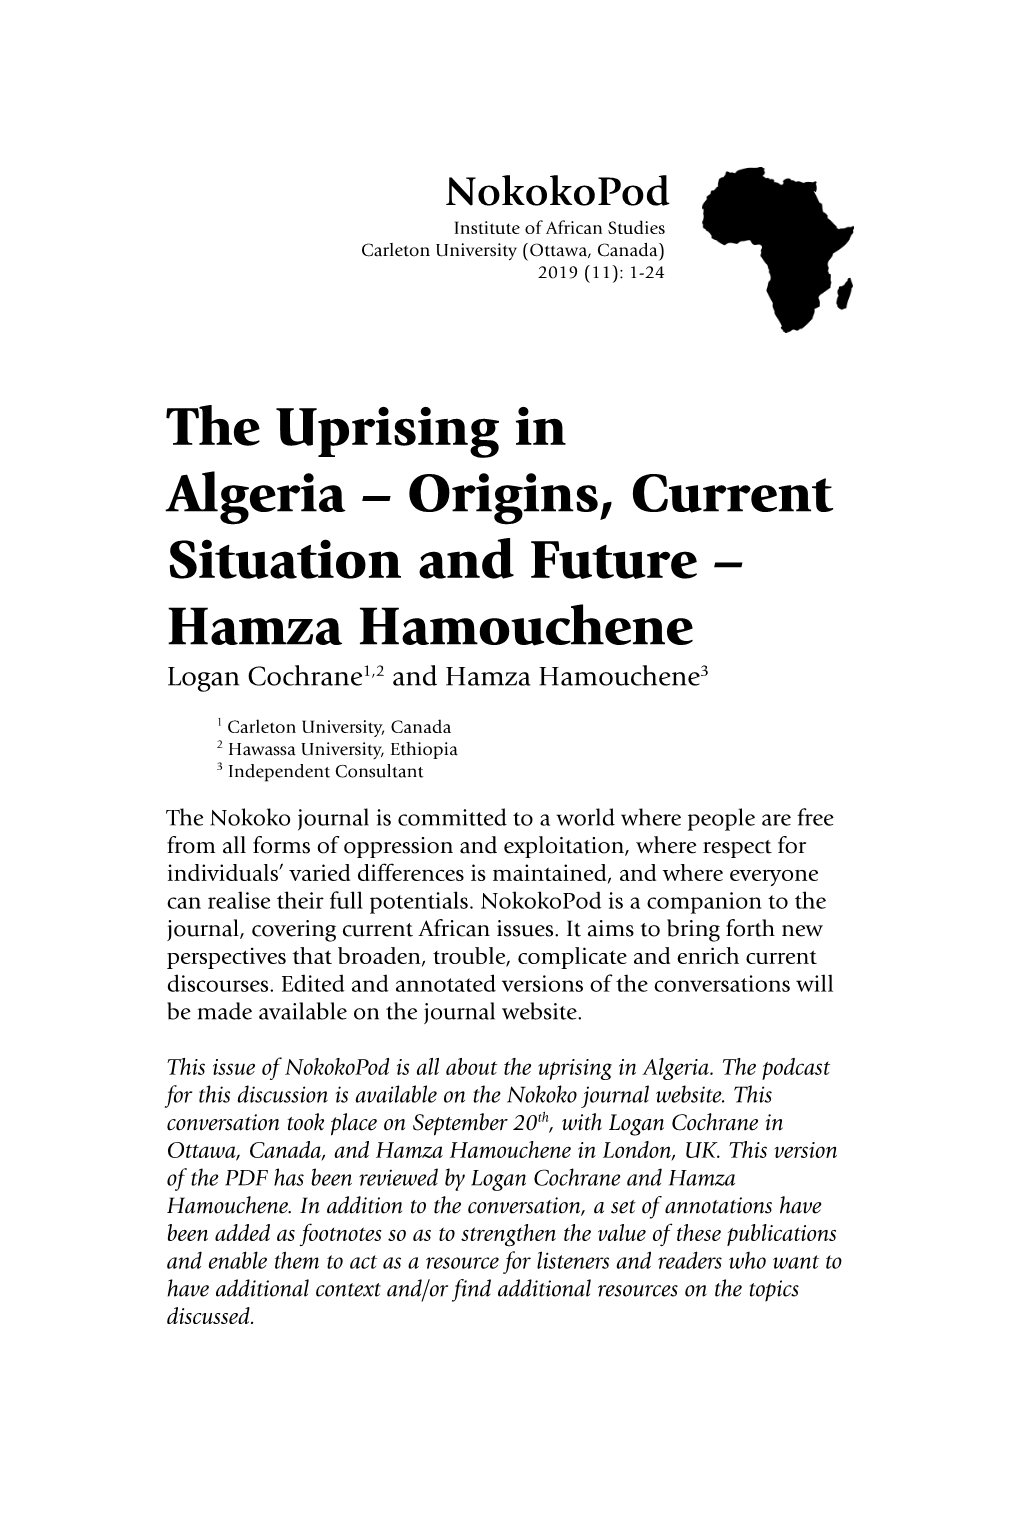 The Uprising in Algeria – Origins, Current Situation and Future – Hamza Hamouchene Logan Cochrane1,2 and Hamza Hamouchene3